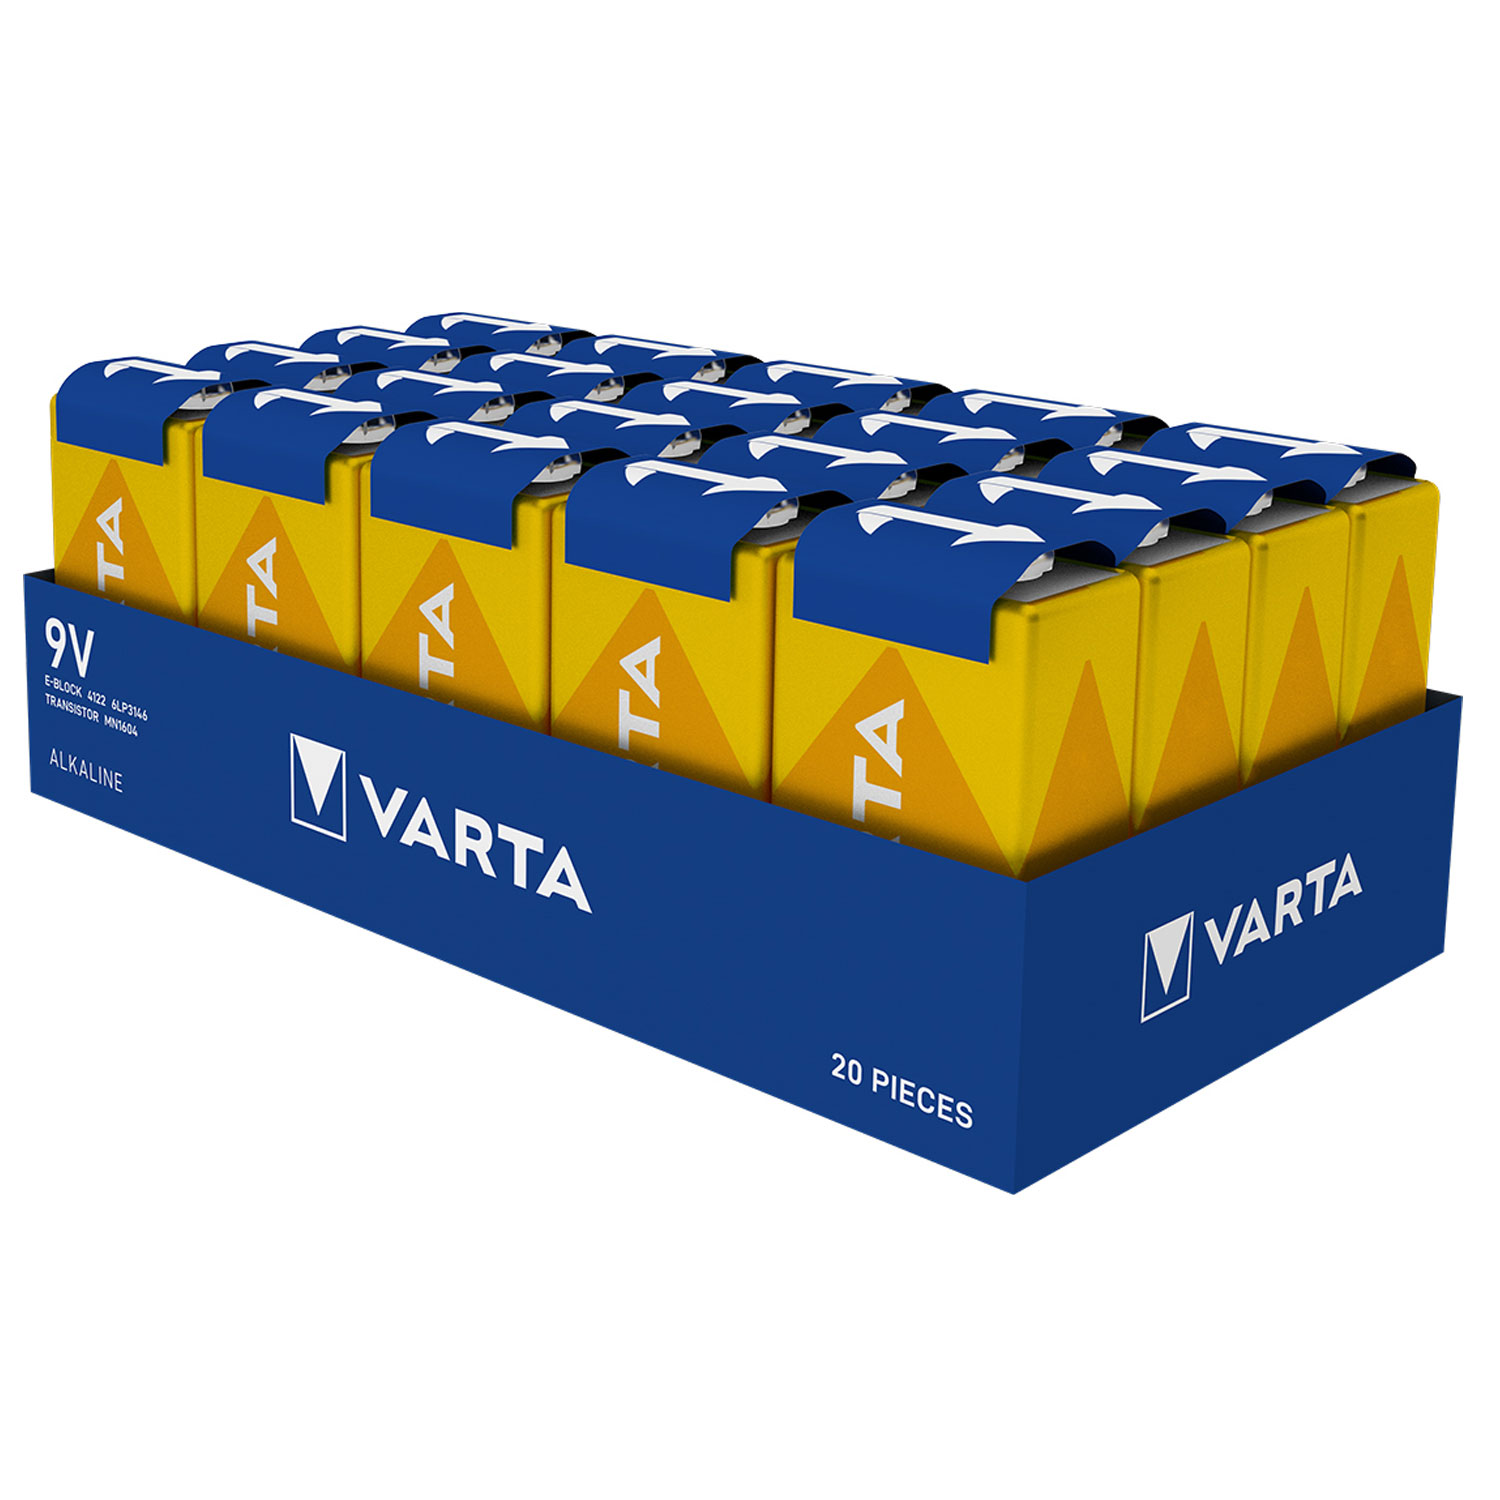 Varta Batterie Longlife Extra 4122 9,0Volt Block 6AM6 420mAh AlMN im 20er Vorteilspack